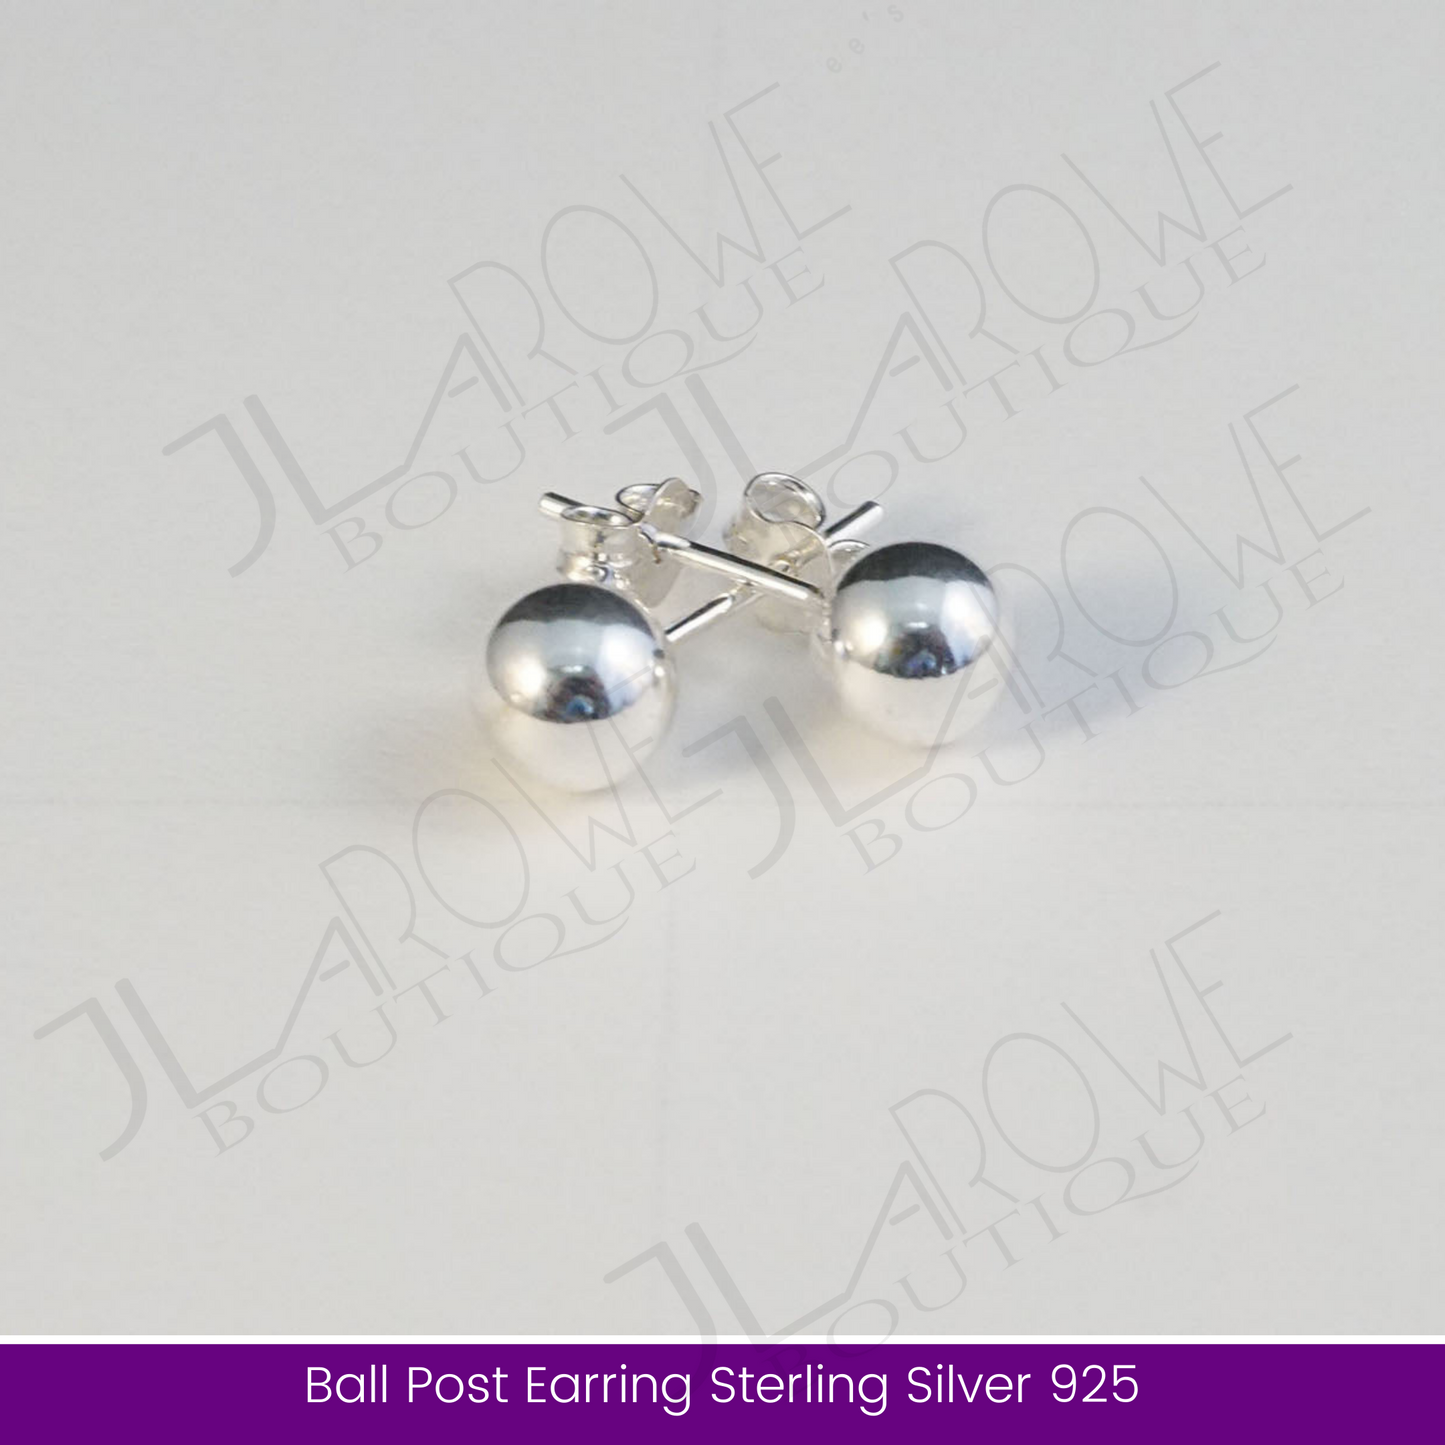 Ball Post Earring Sterling Silver 925